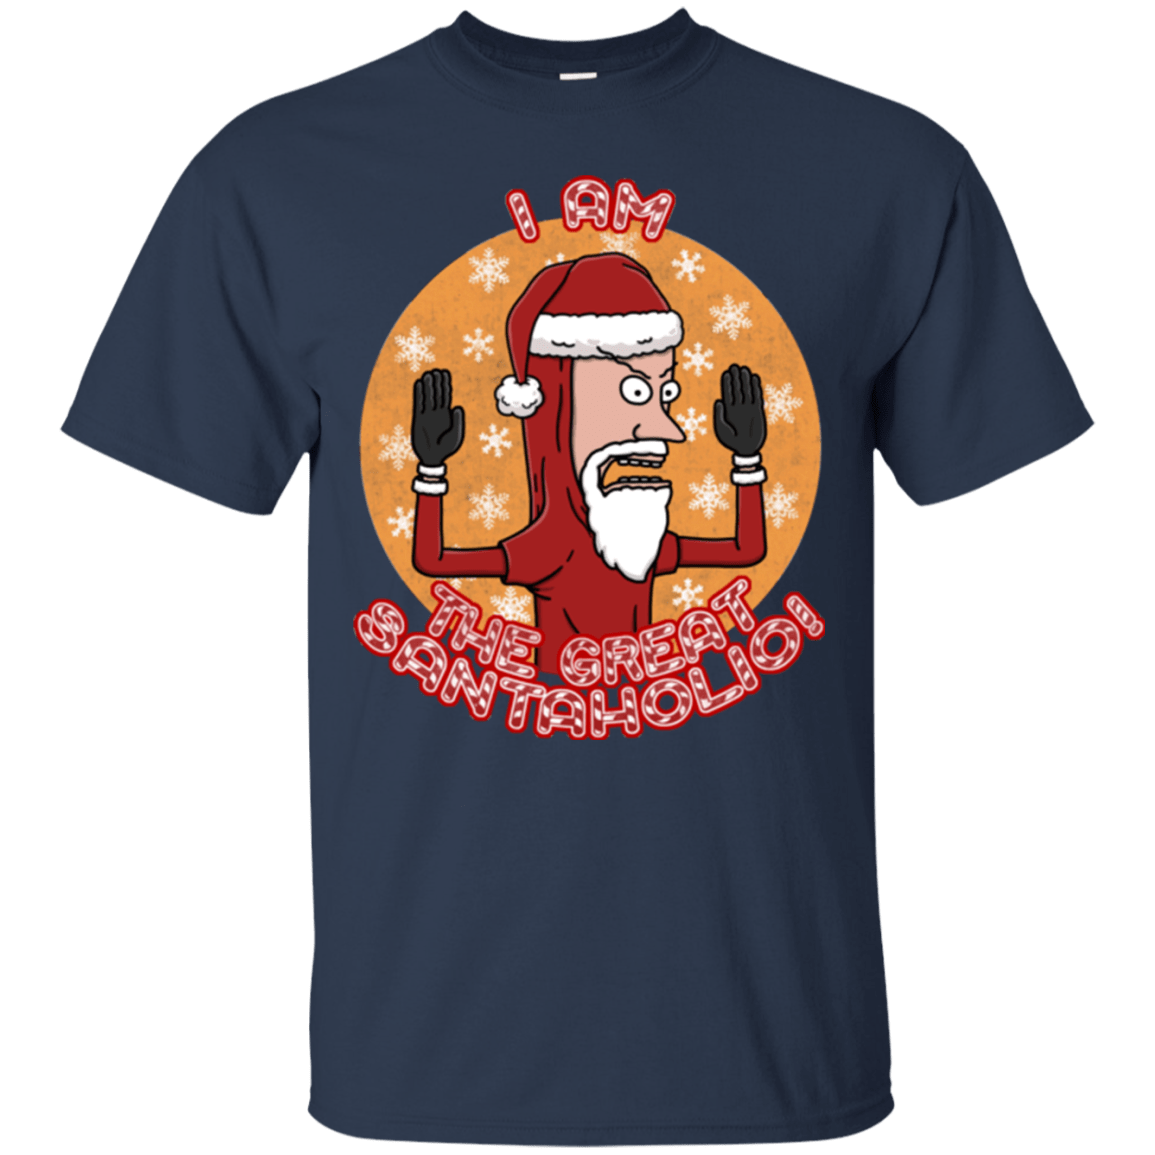 The Great Santaholio T-Shirt